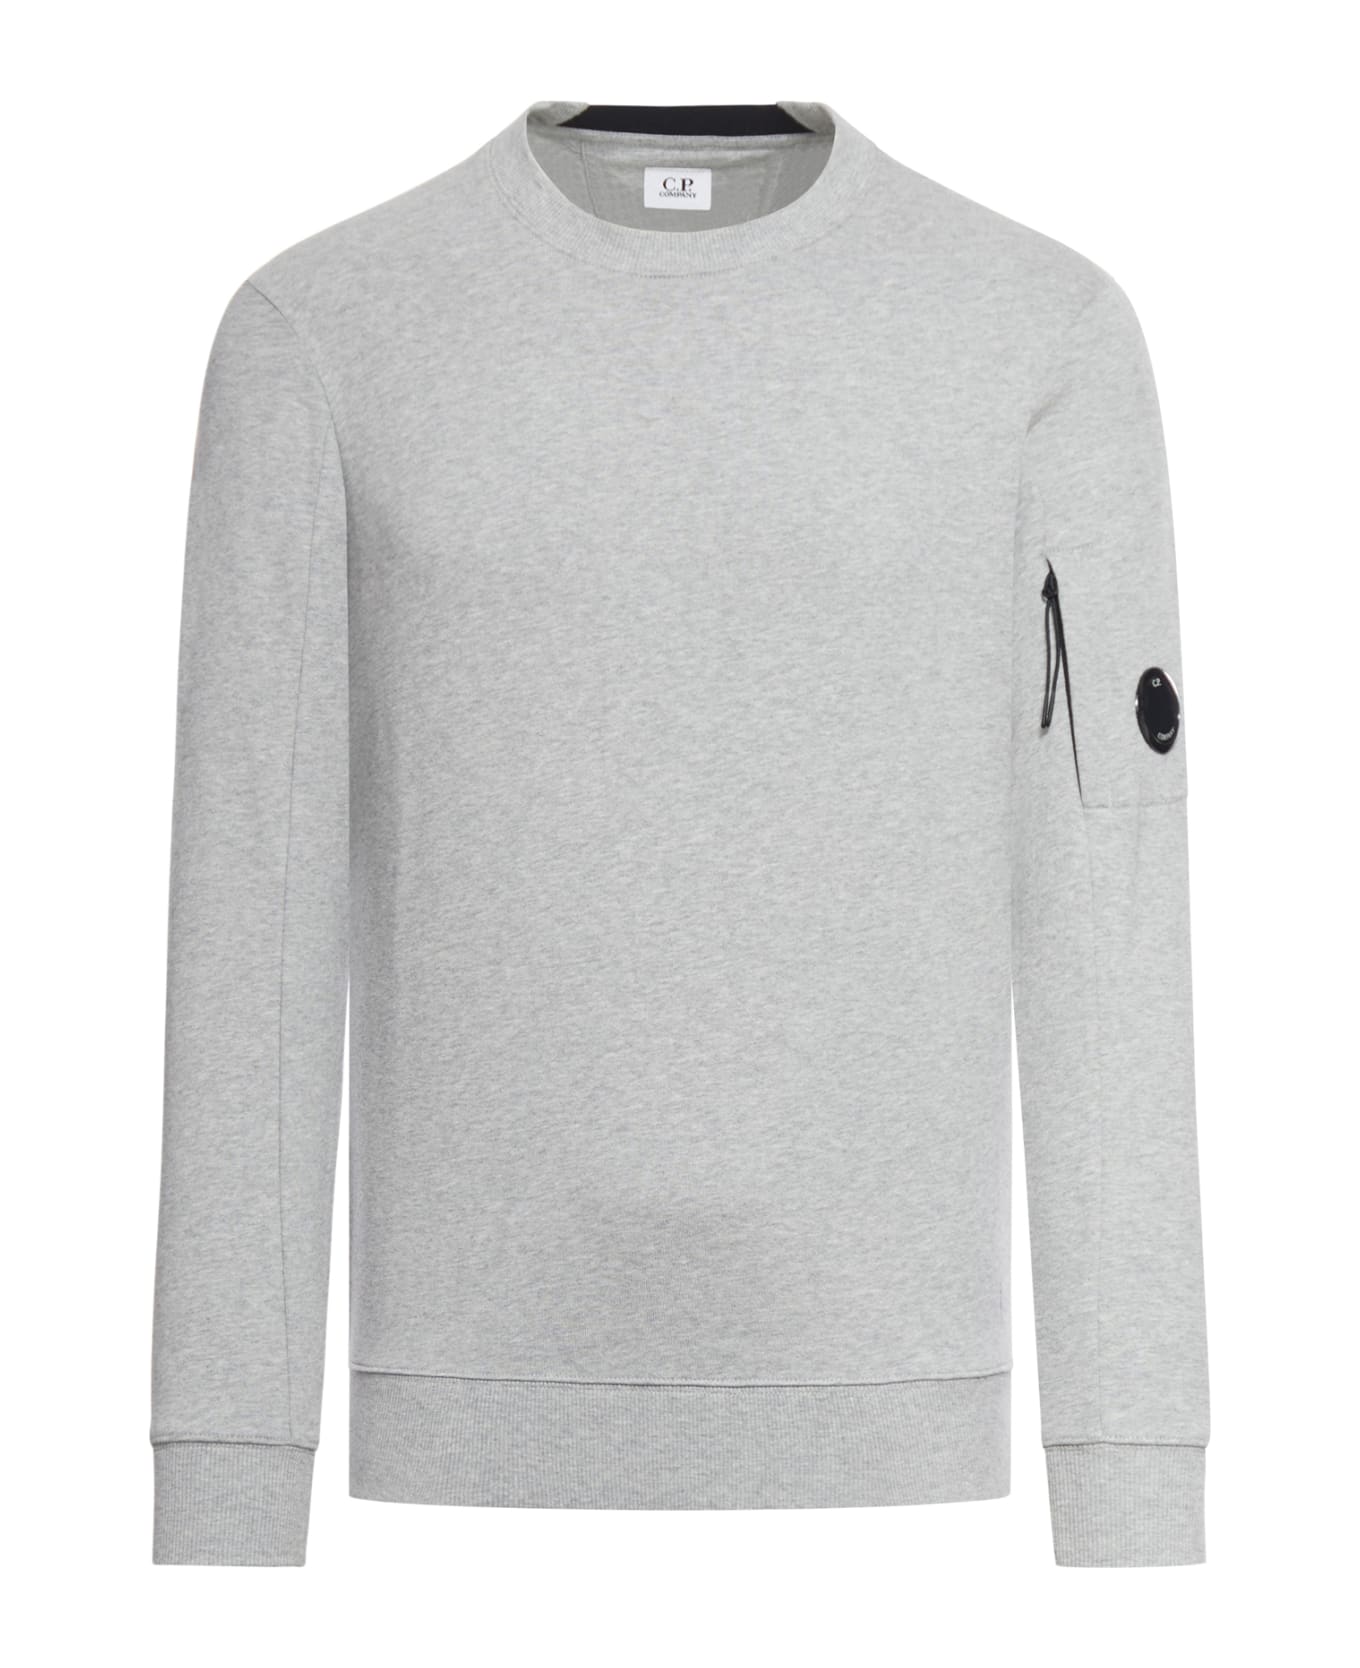 C.P. Company 'diagonal Raised Fleece' Grey Cotton Sweatshirt - Grey Melange